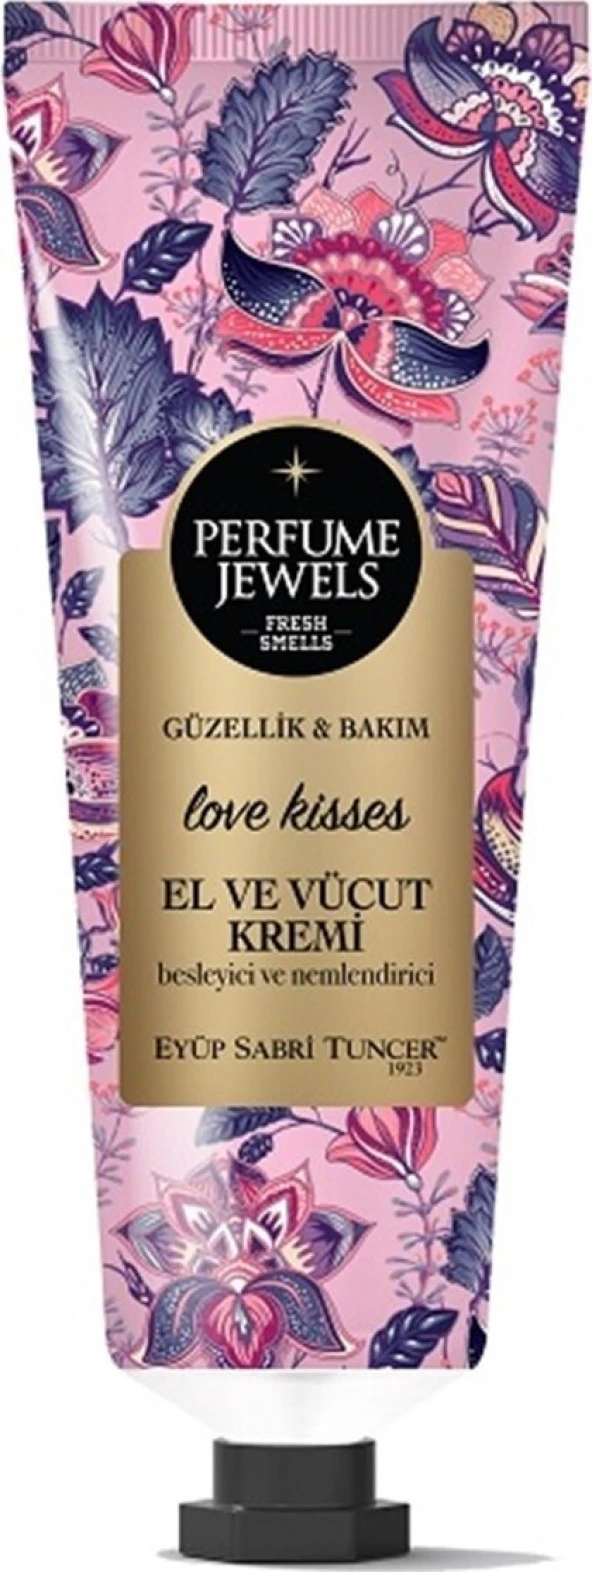 Eyüp Sabri Tuncer Perfume Jewels Love Kisses El Kremi 50ML x 4